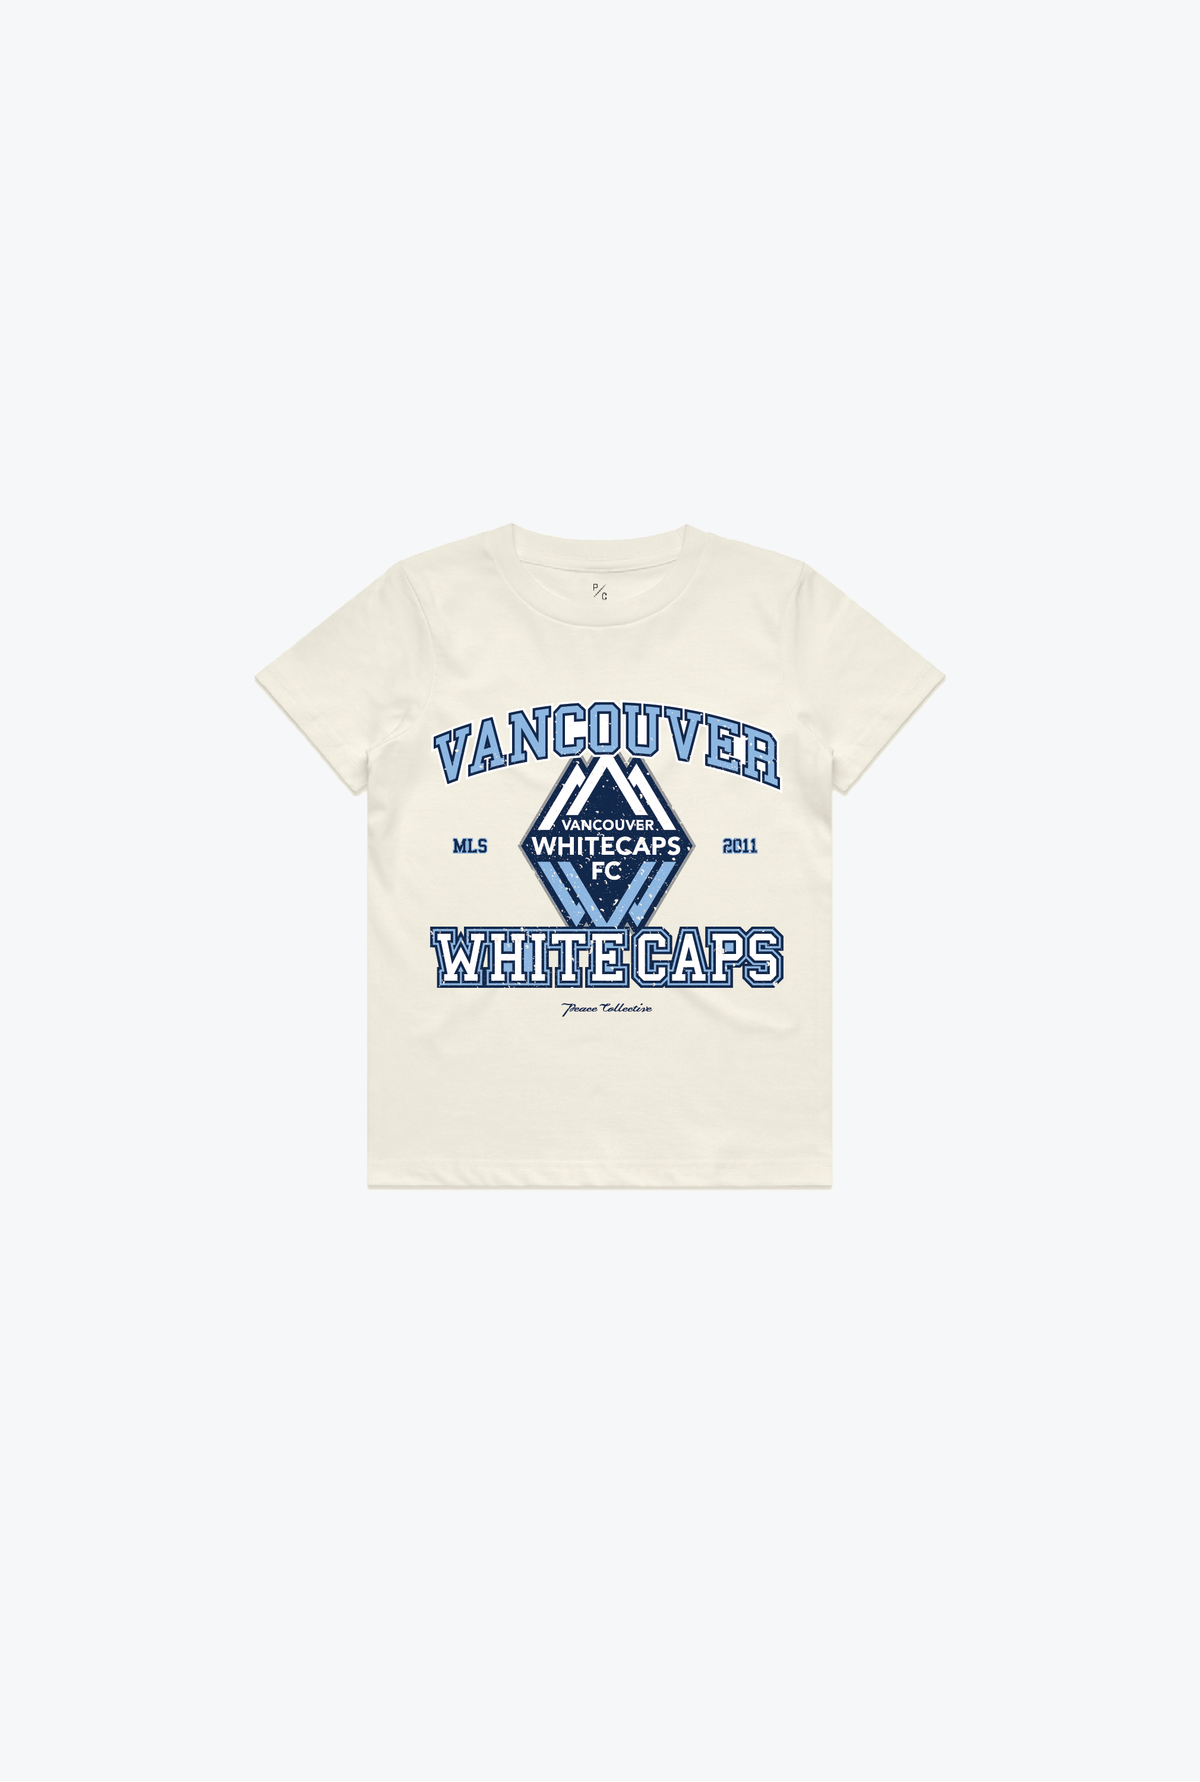 Vancouver Whitecaps FC Vintage Washed Kids T-Shirt - Ivory